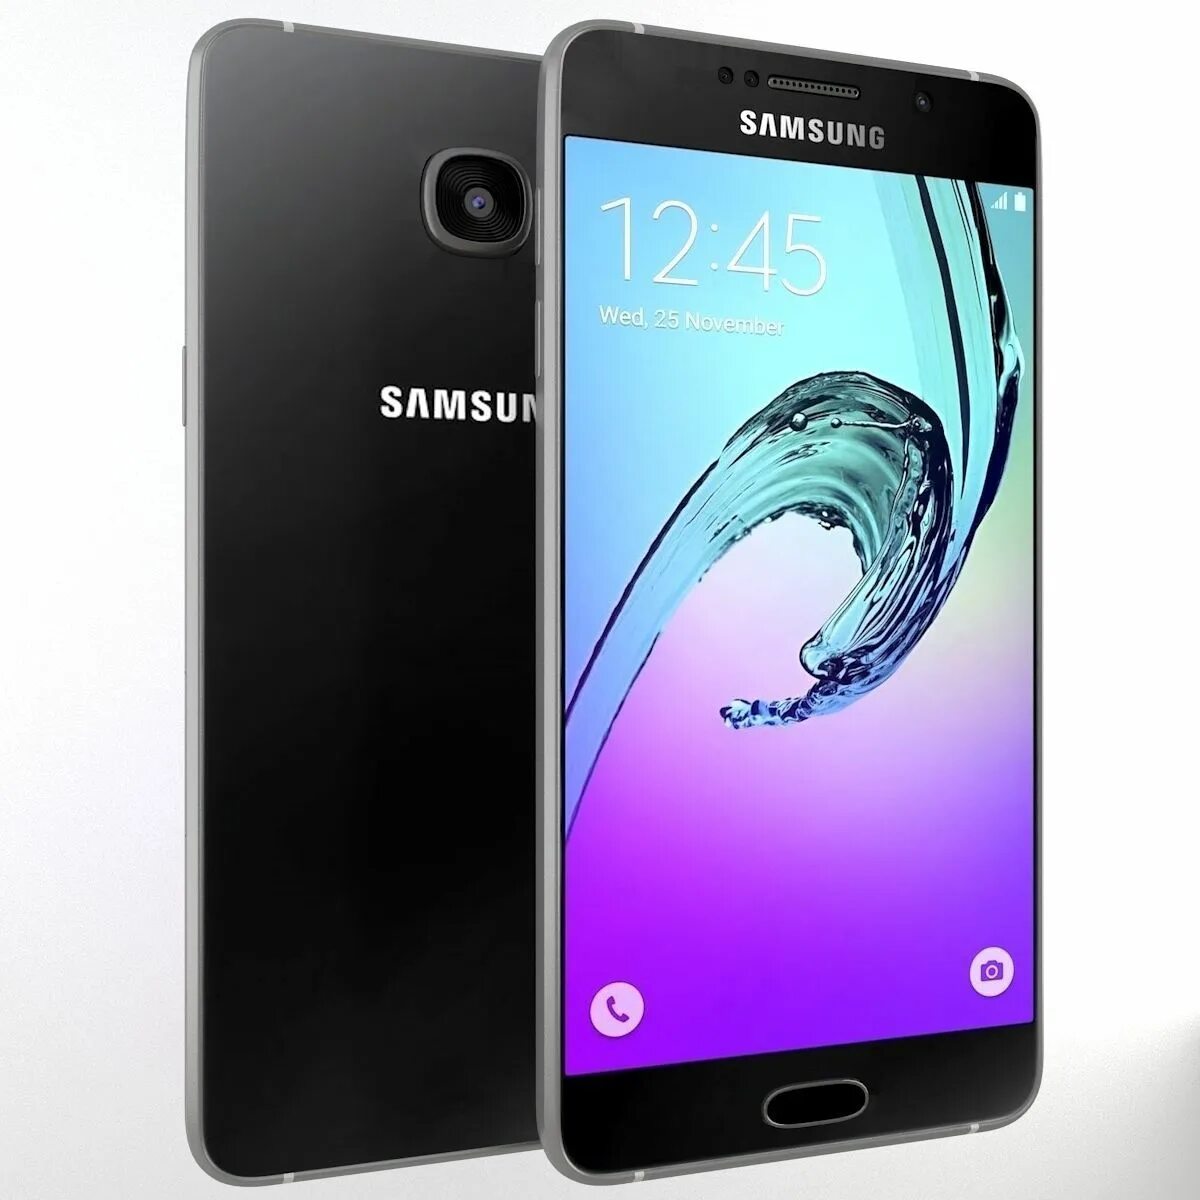 Samsung Galaxy a3 2016. Samsung Galaxy a32016. Samsung Galaxy a3 2016 Black. Самсунг а3 2016. 3.3 2016